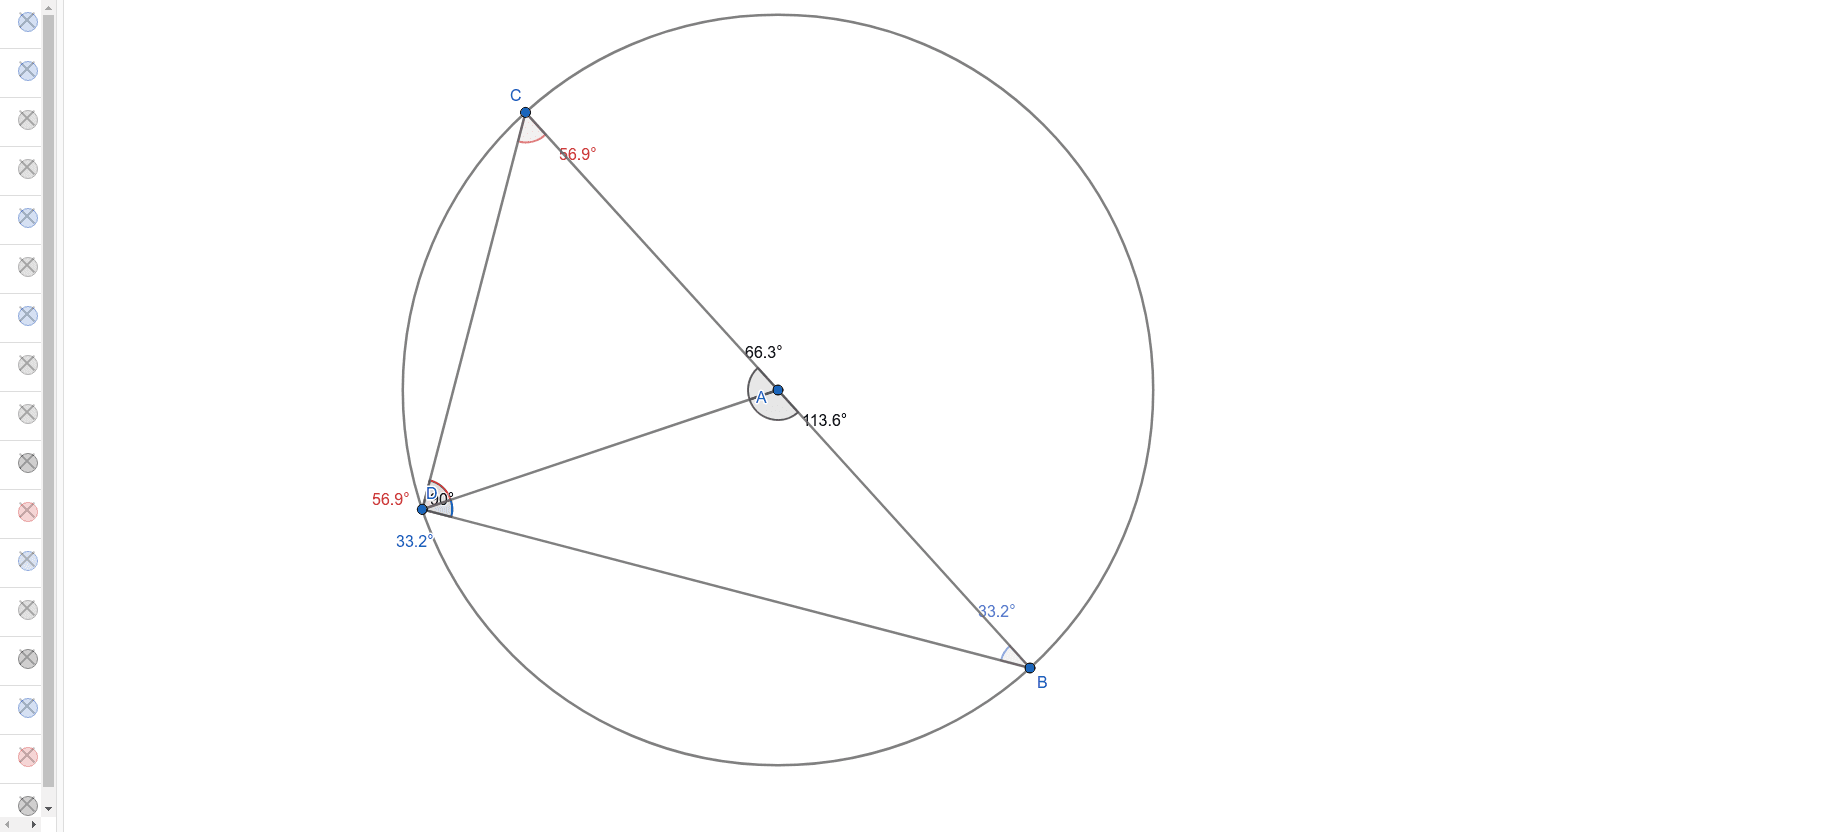 Circle Theorem Right Angle Proof With Isosceles Triangles Geogebra 2010